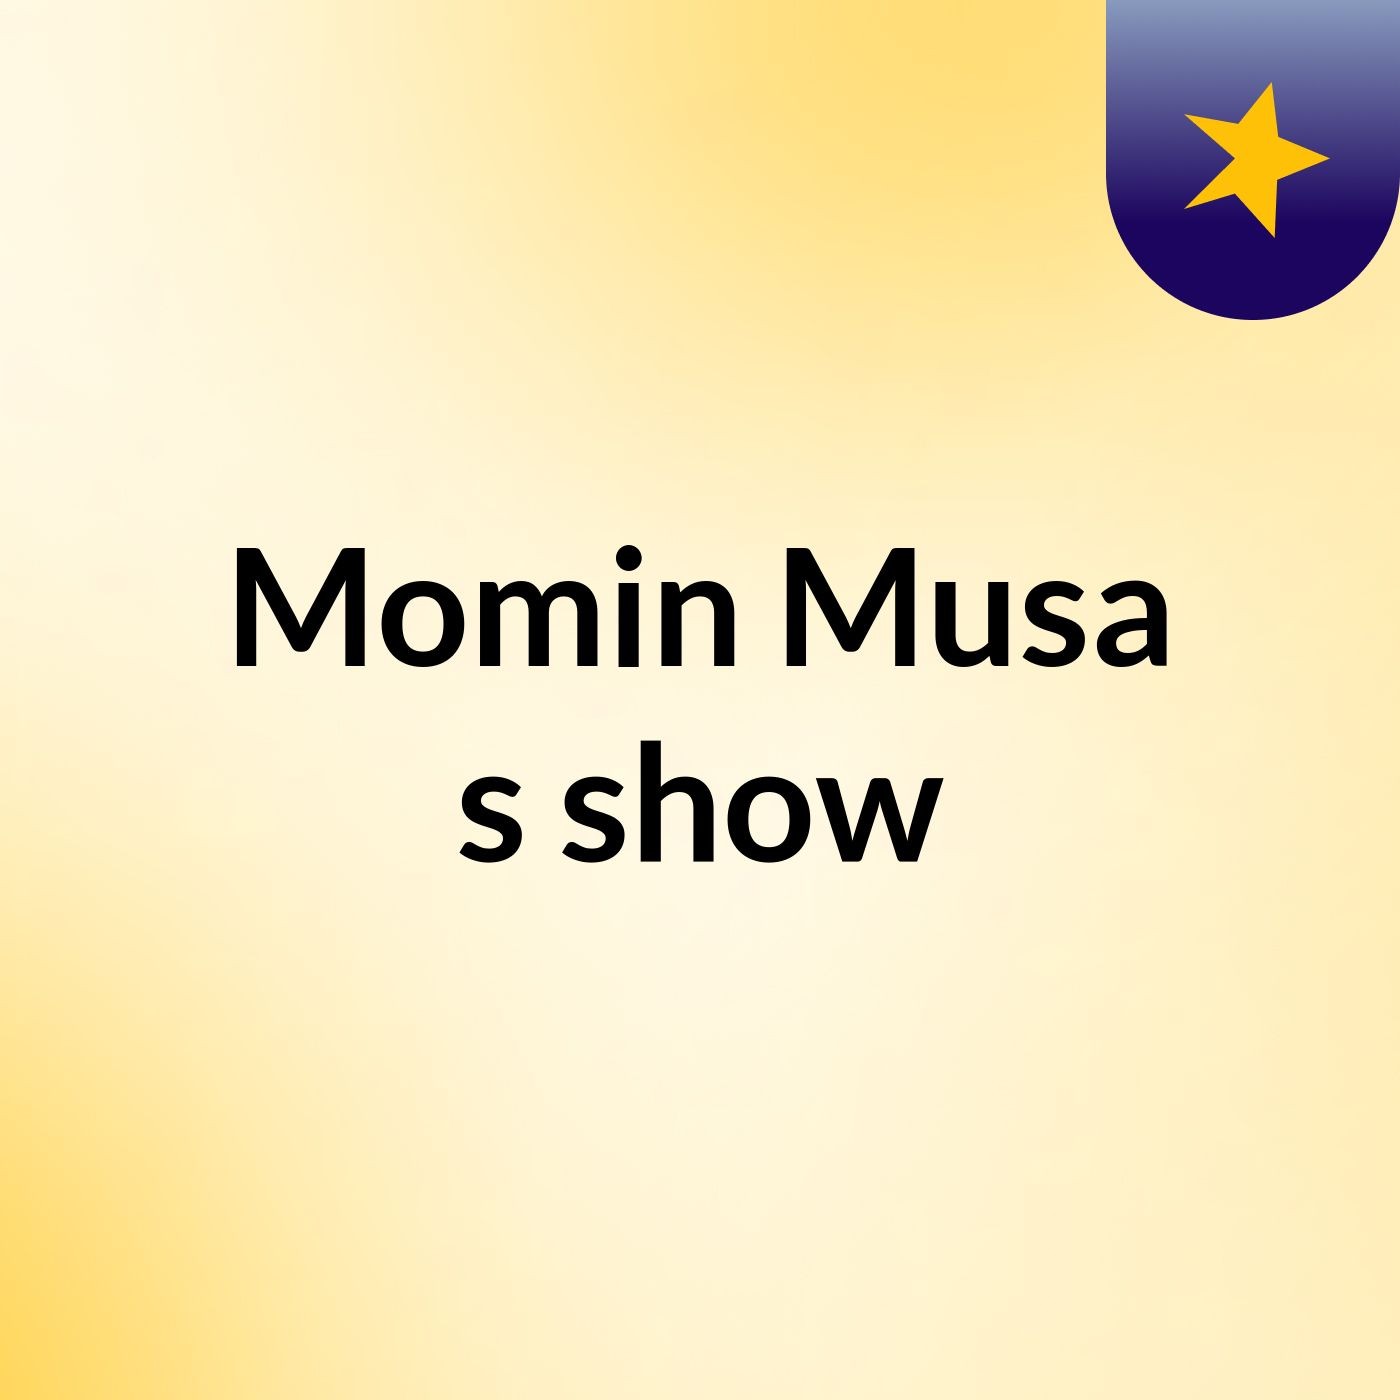 Momin Musa's show